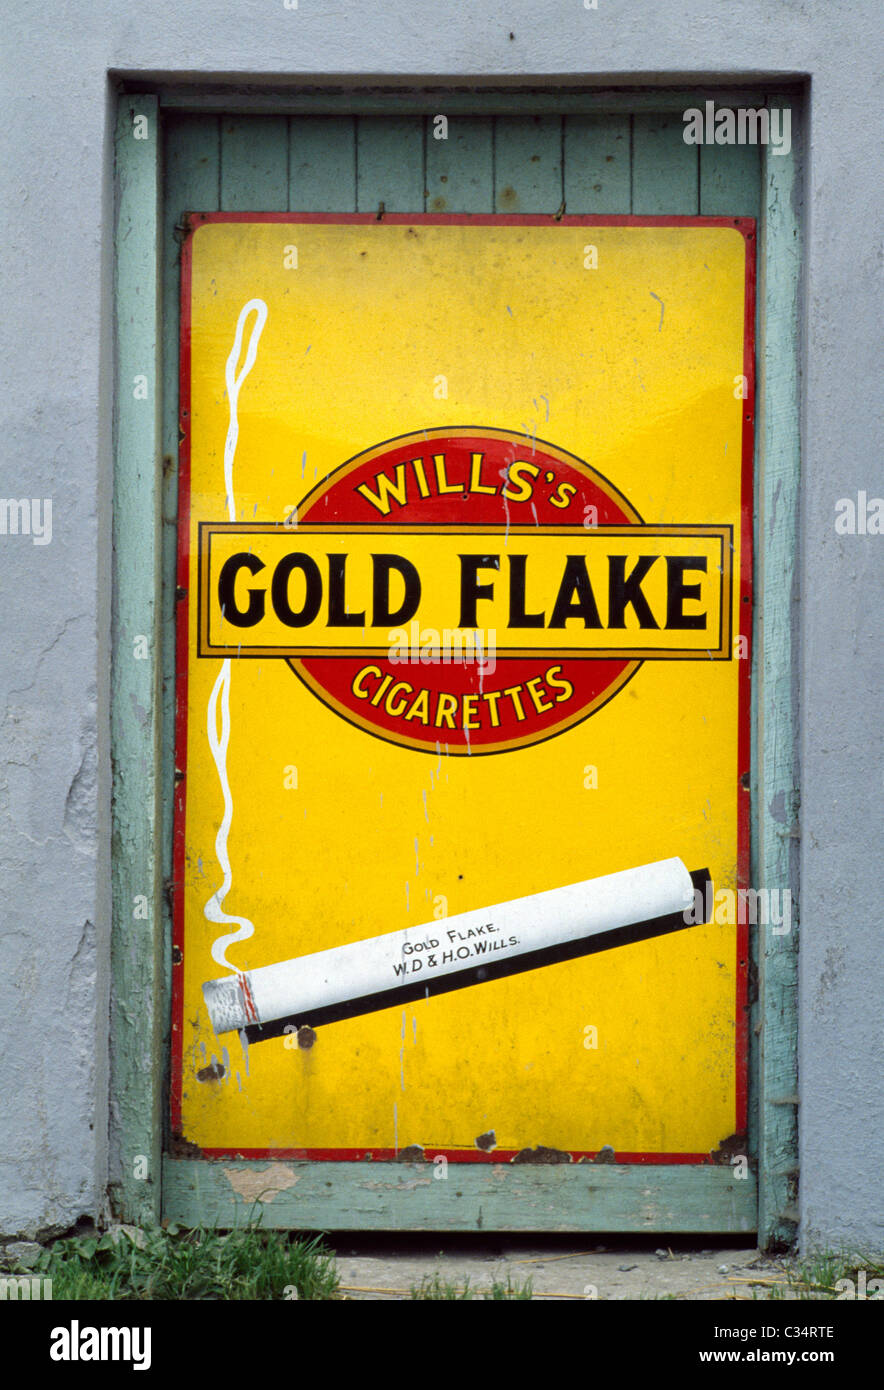 Old Cigarette Advertisment, Dublin, County Dublin, Ireland Stock Photo